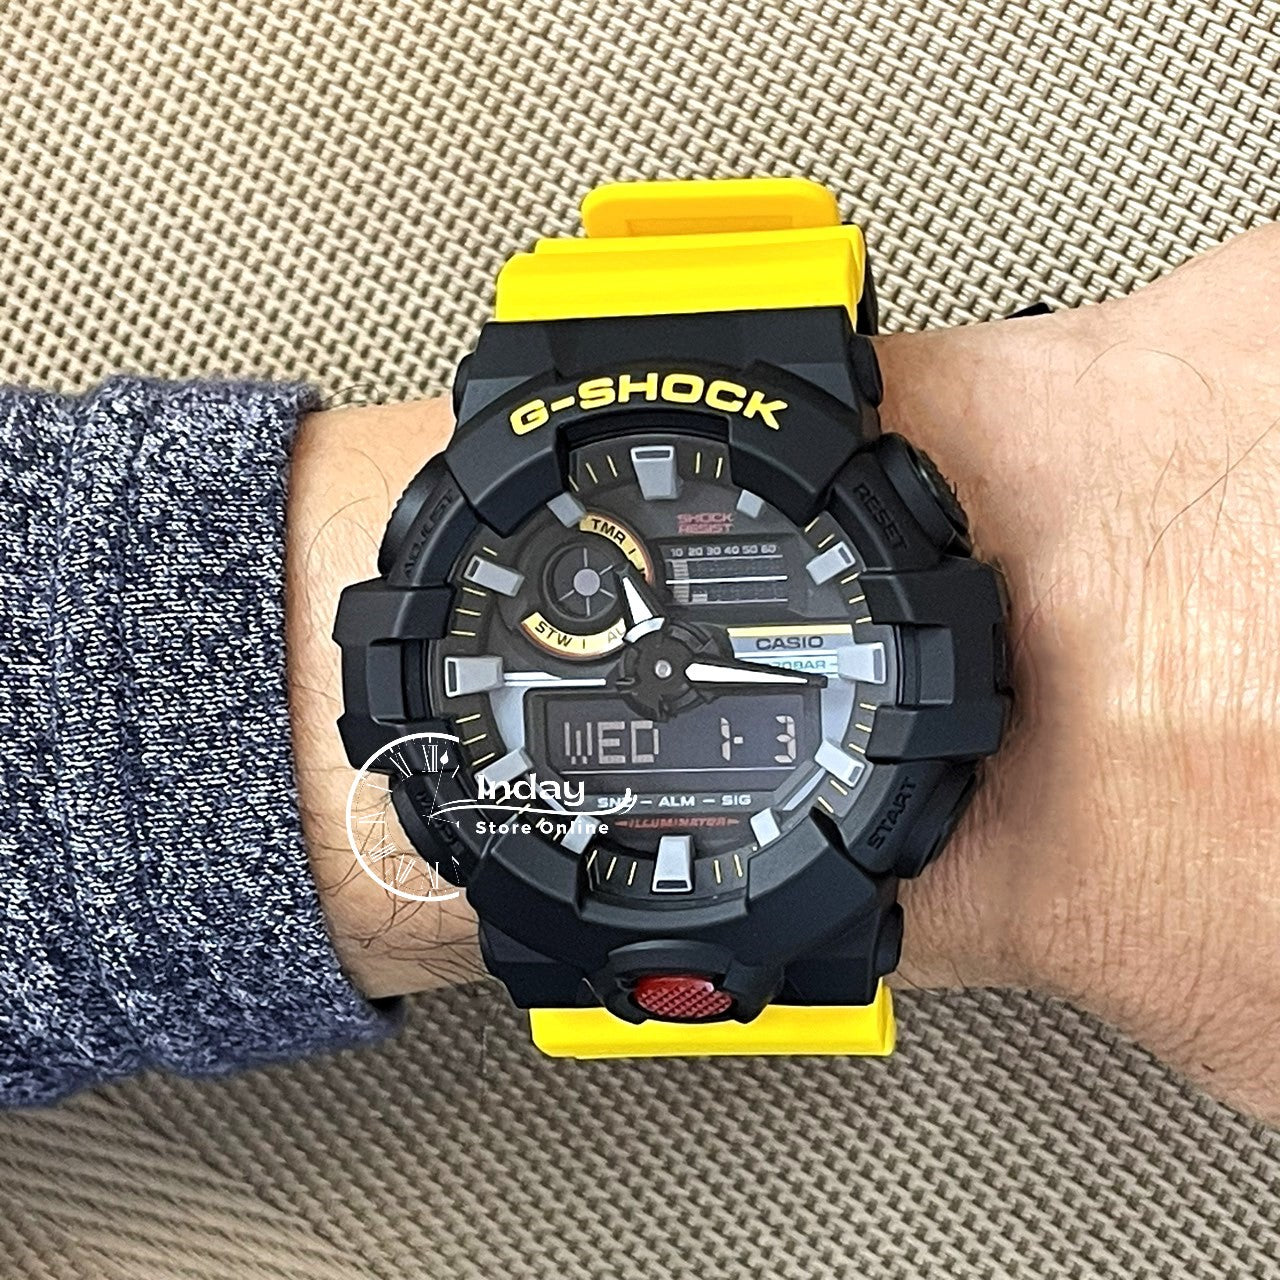 Casio G-Shock Men's Watch GA-700MT-1A9 Analog-Digital Shock Resistant Resin Band Mineral Glass